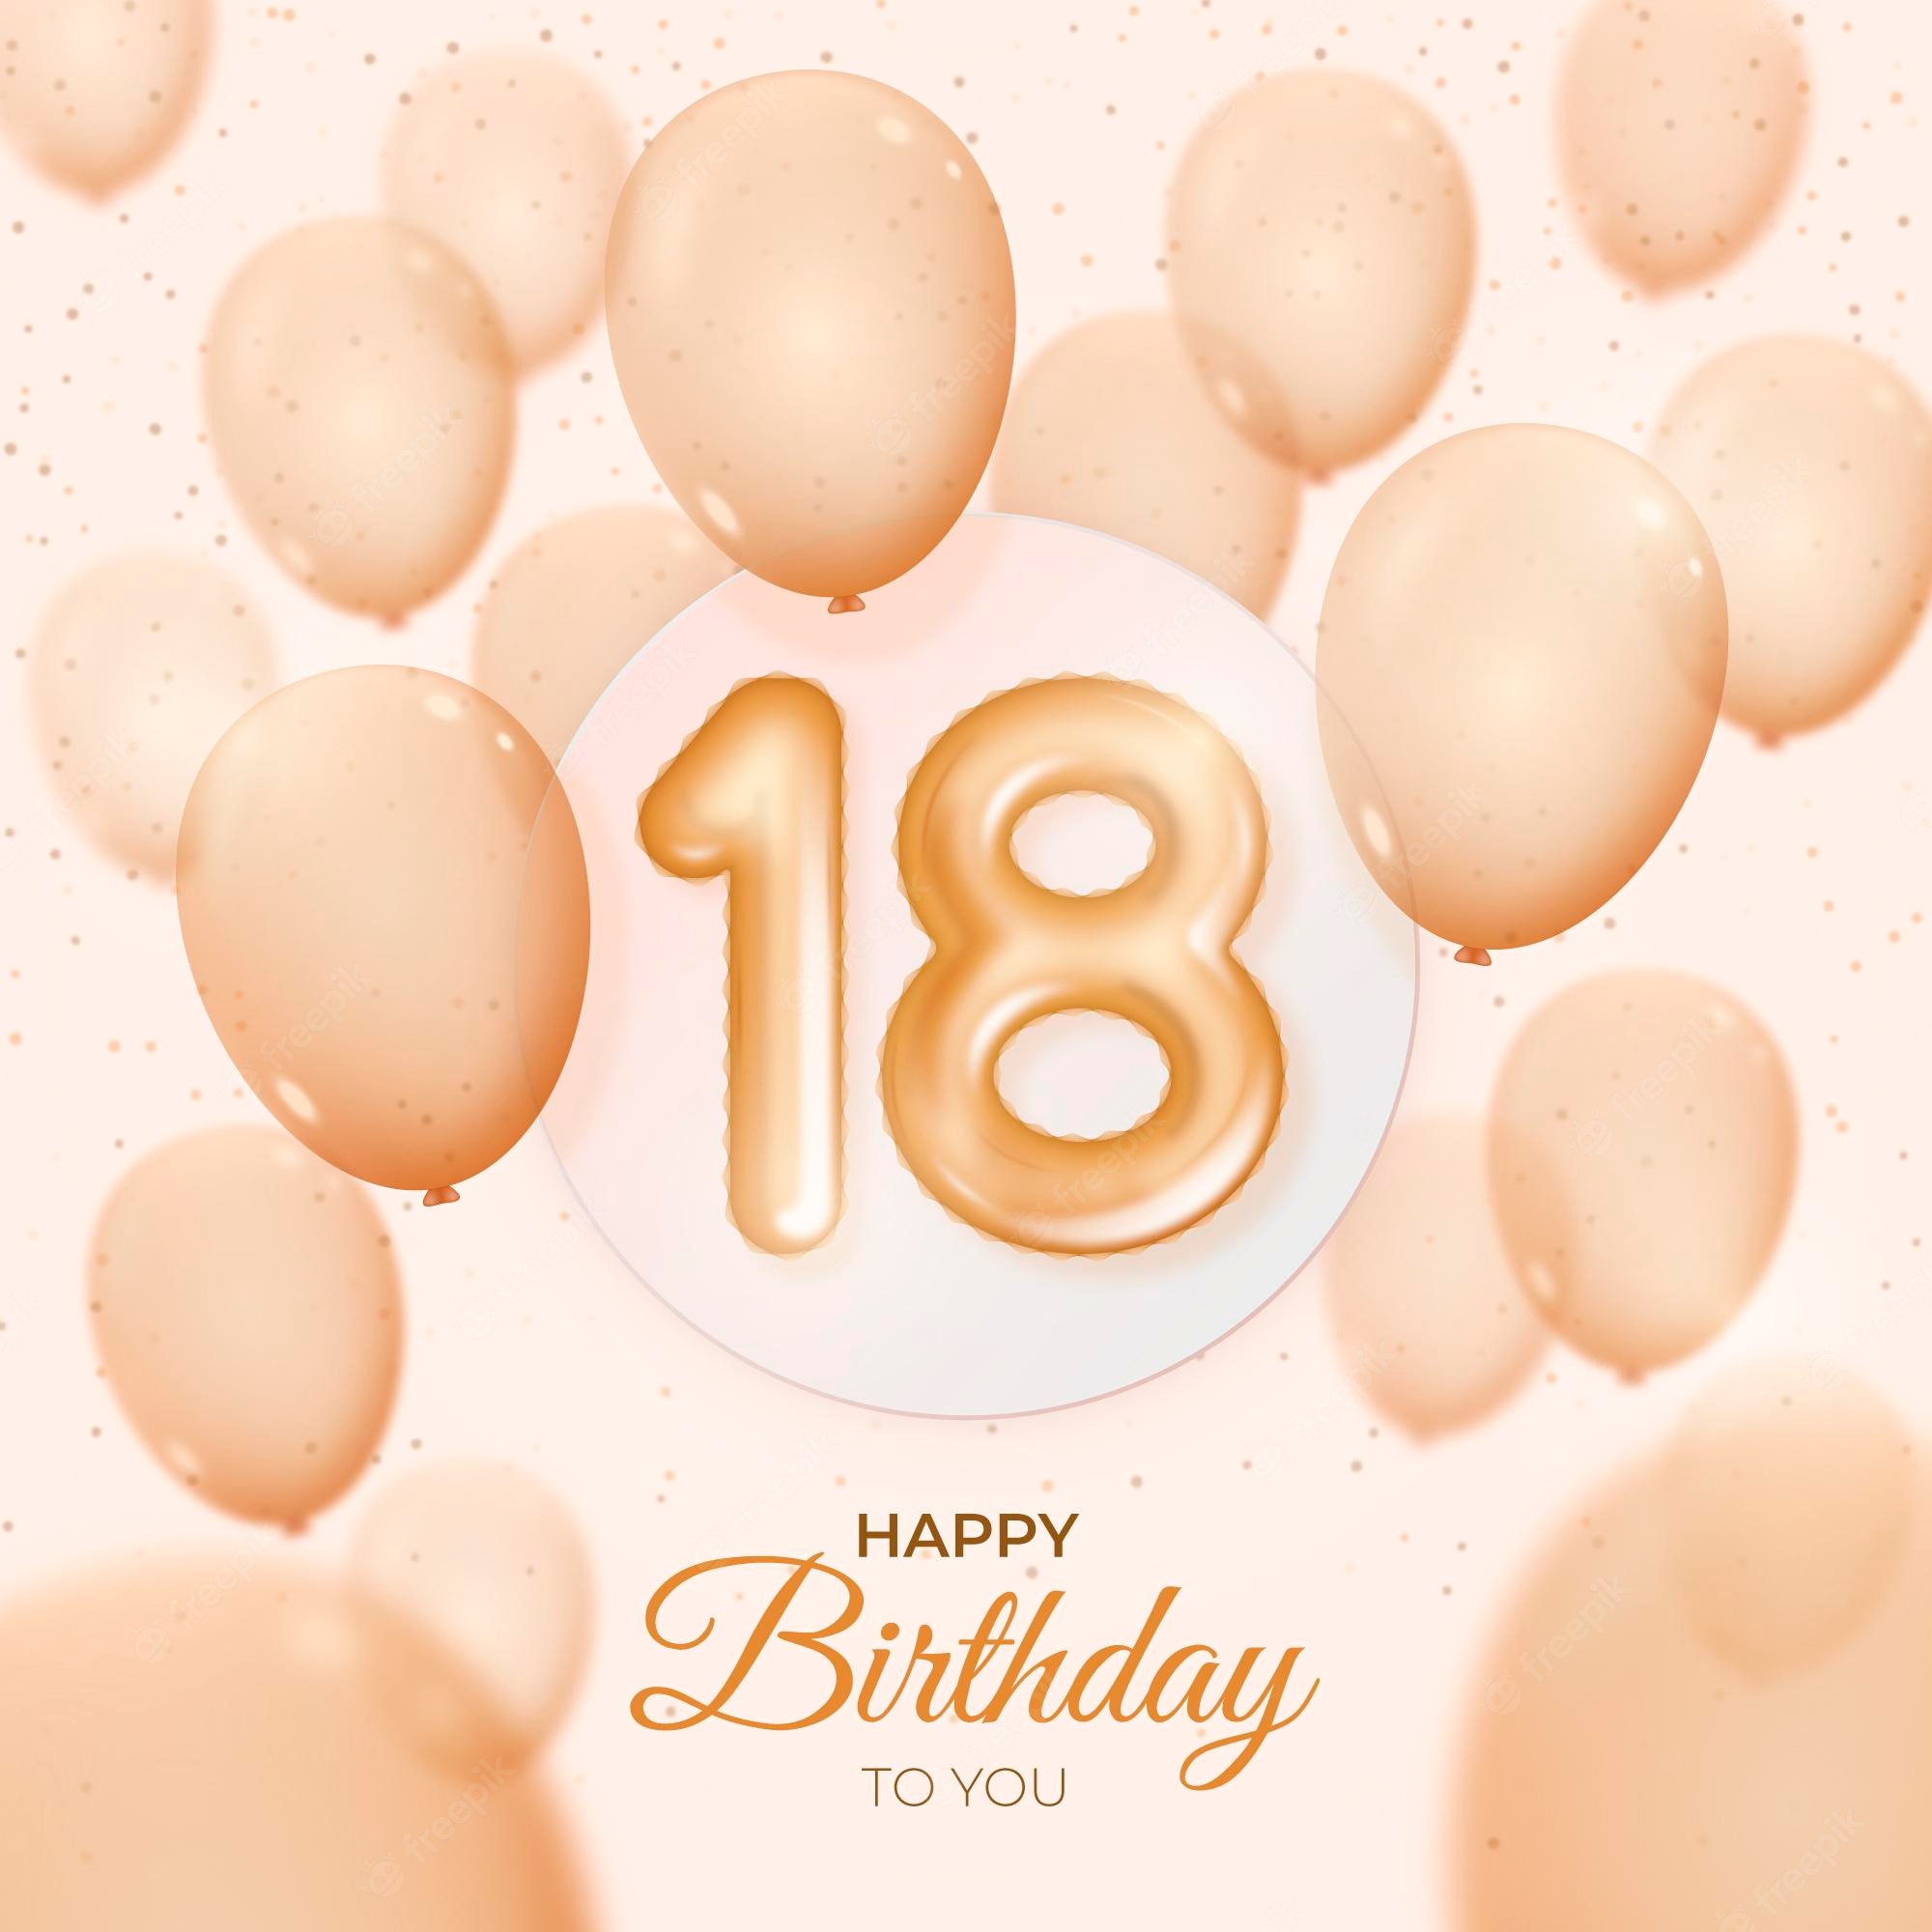 18th Birthday Background Image